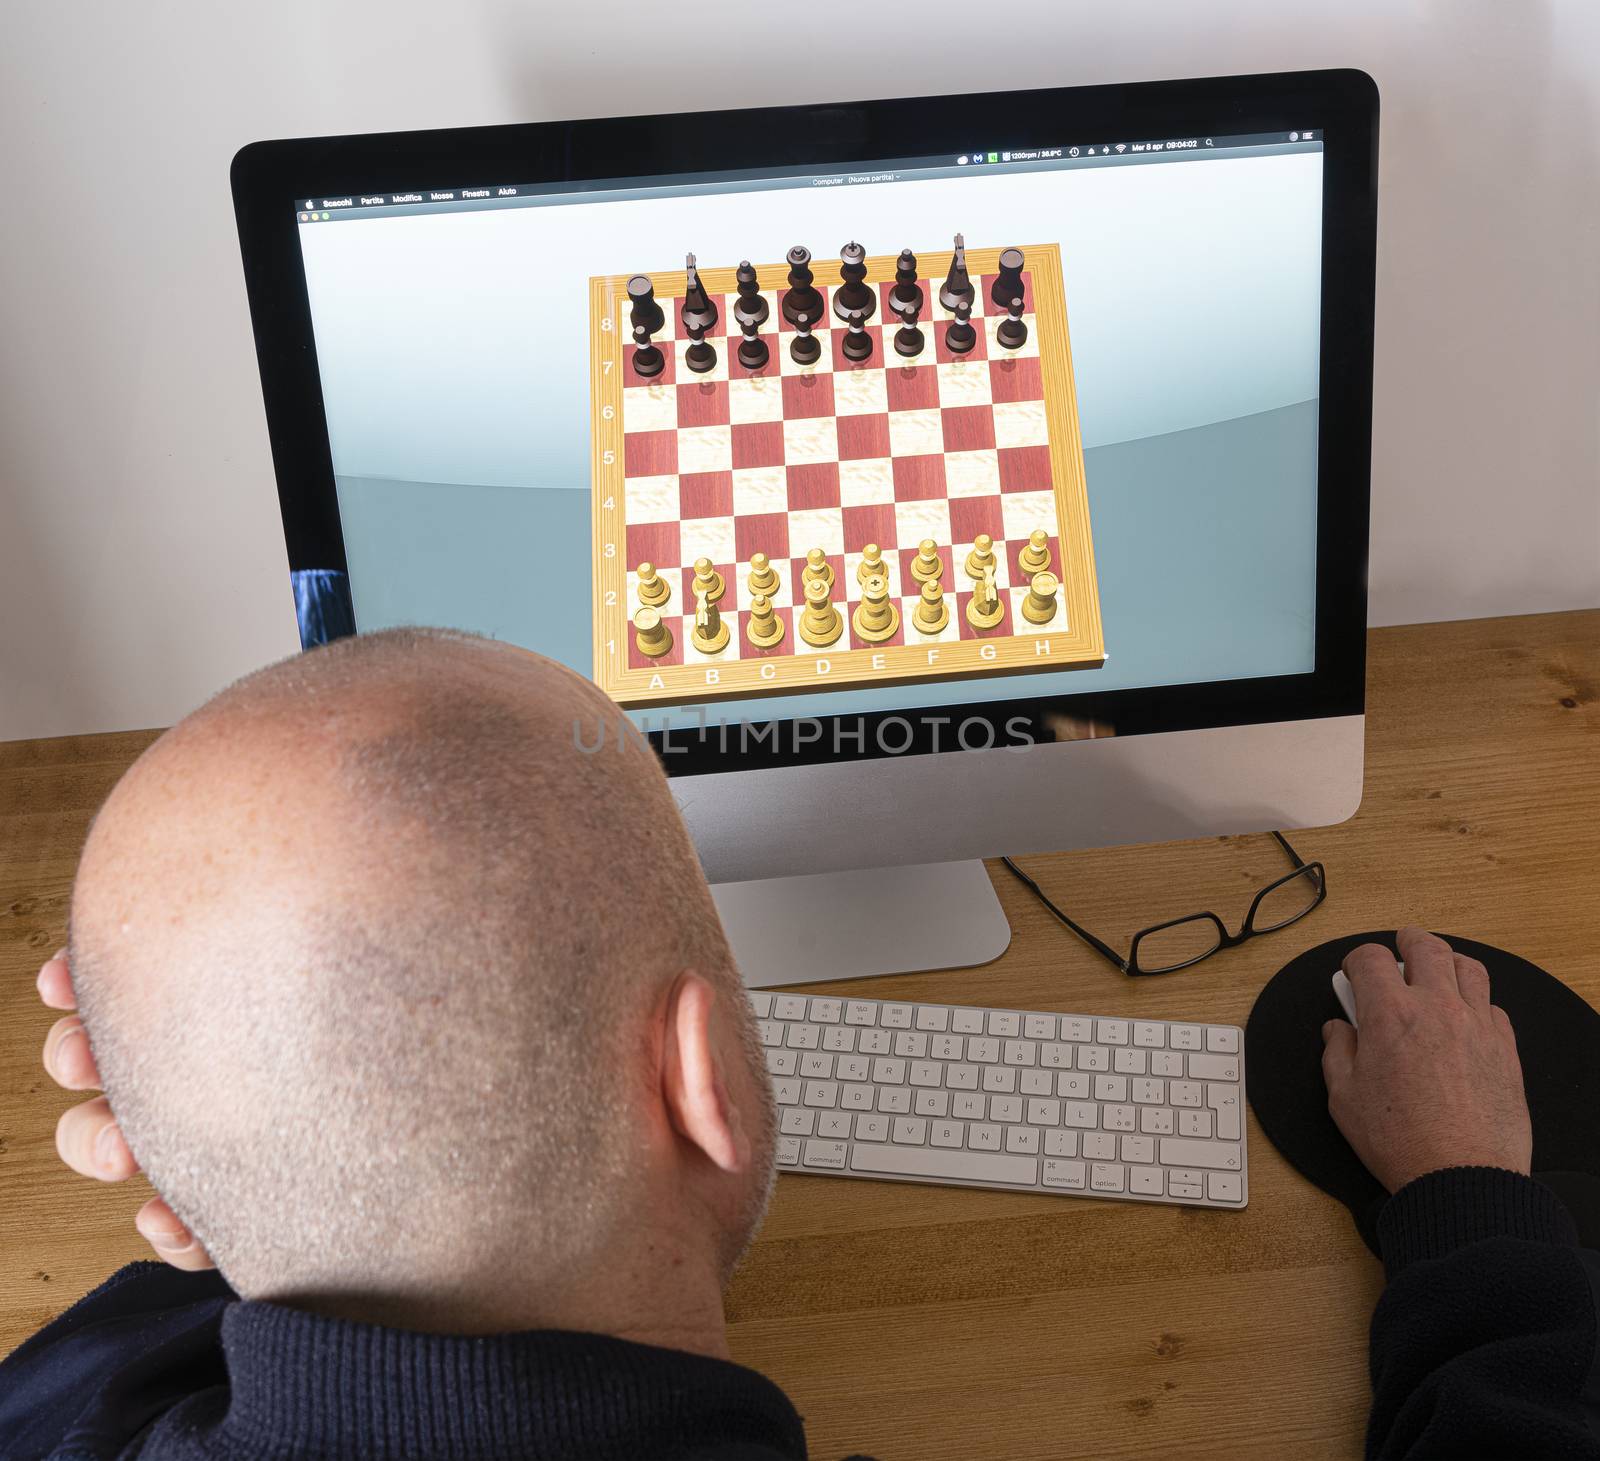 playing chess on the computer during the coronavirus quarantine